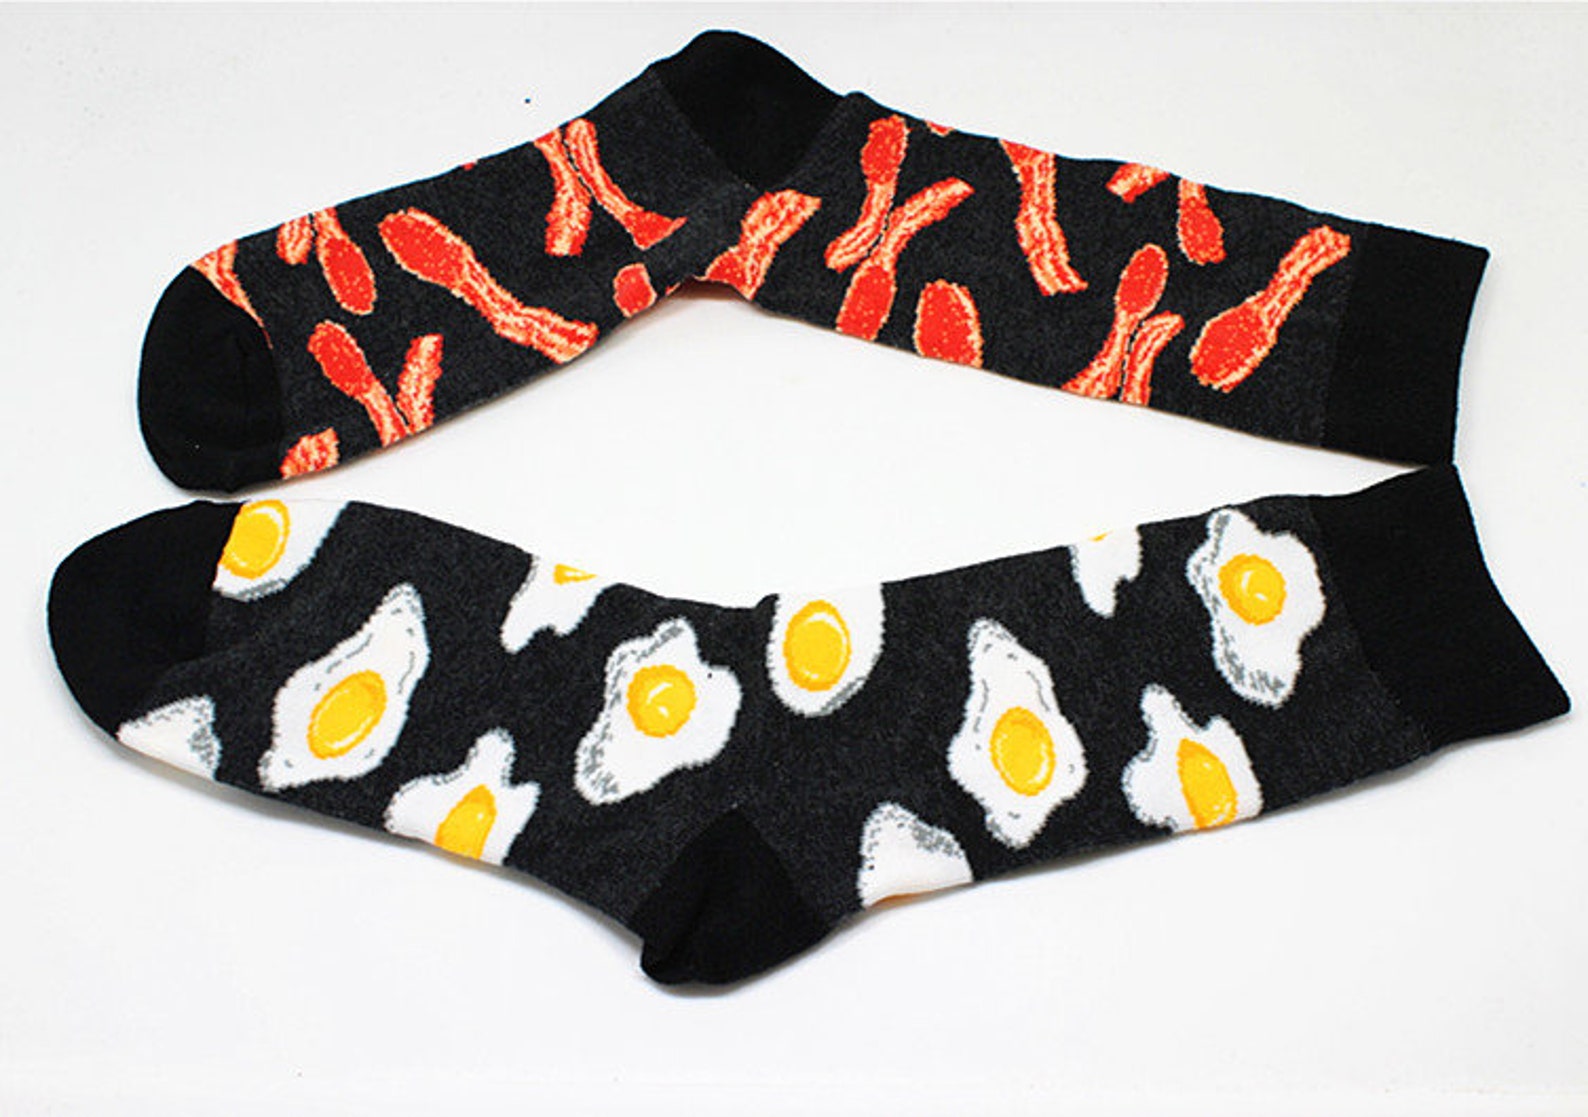 Eggs and Bacon Socks Unisex Novelty socks Fun food socks | Etsy